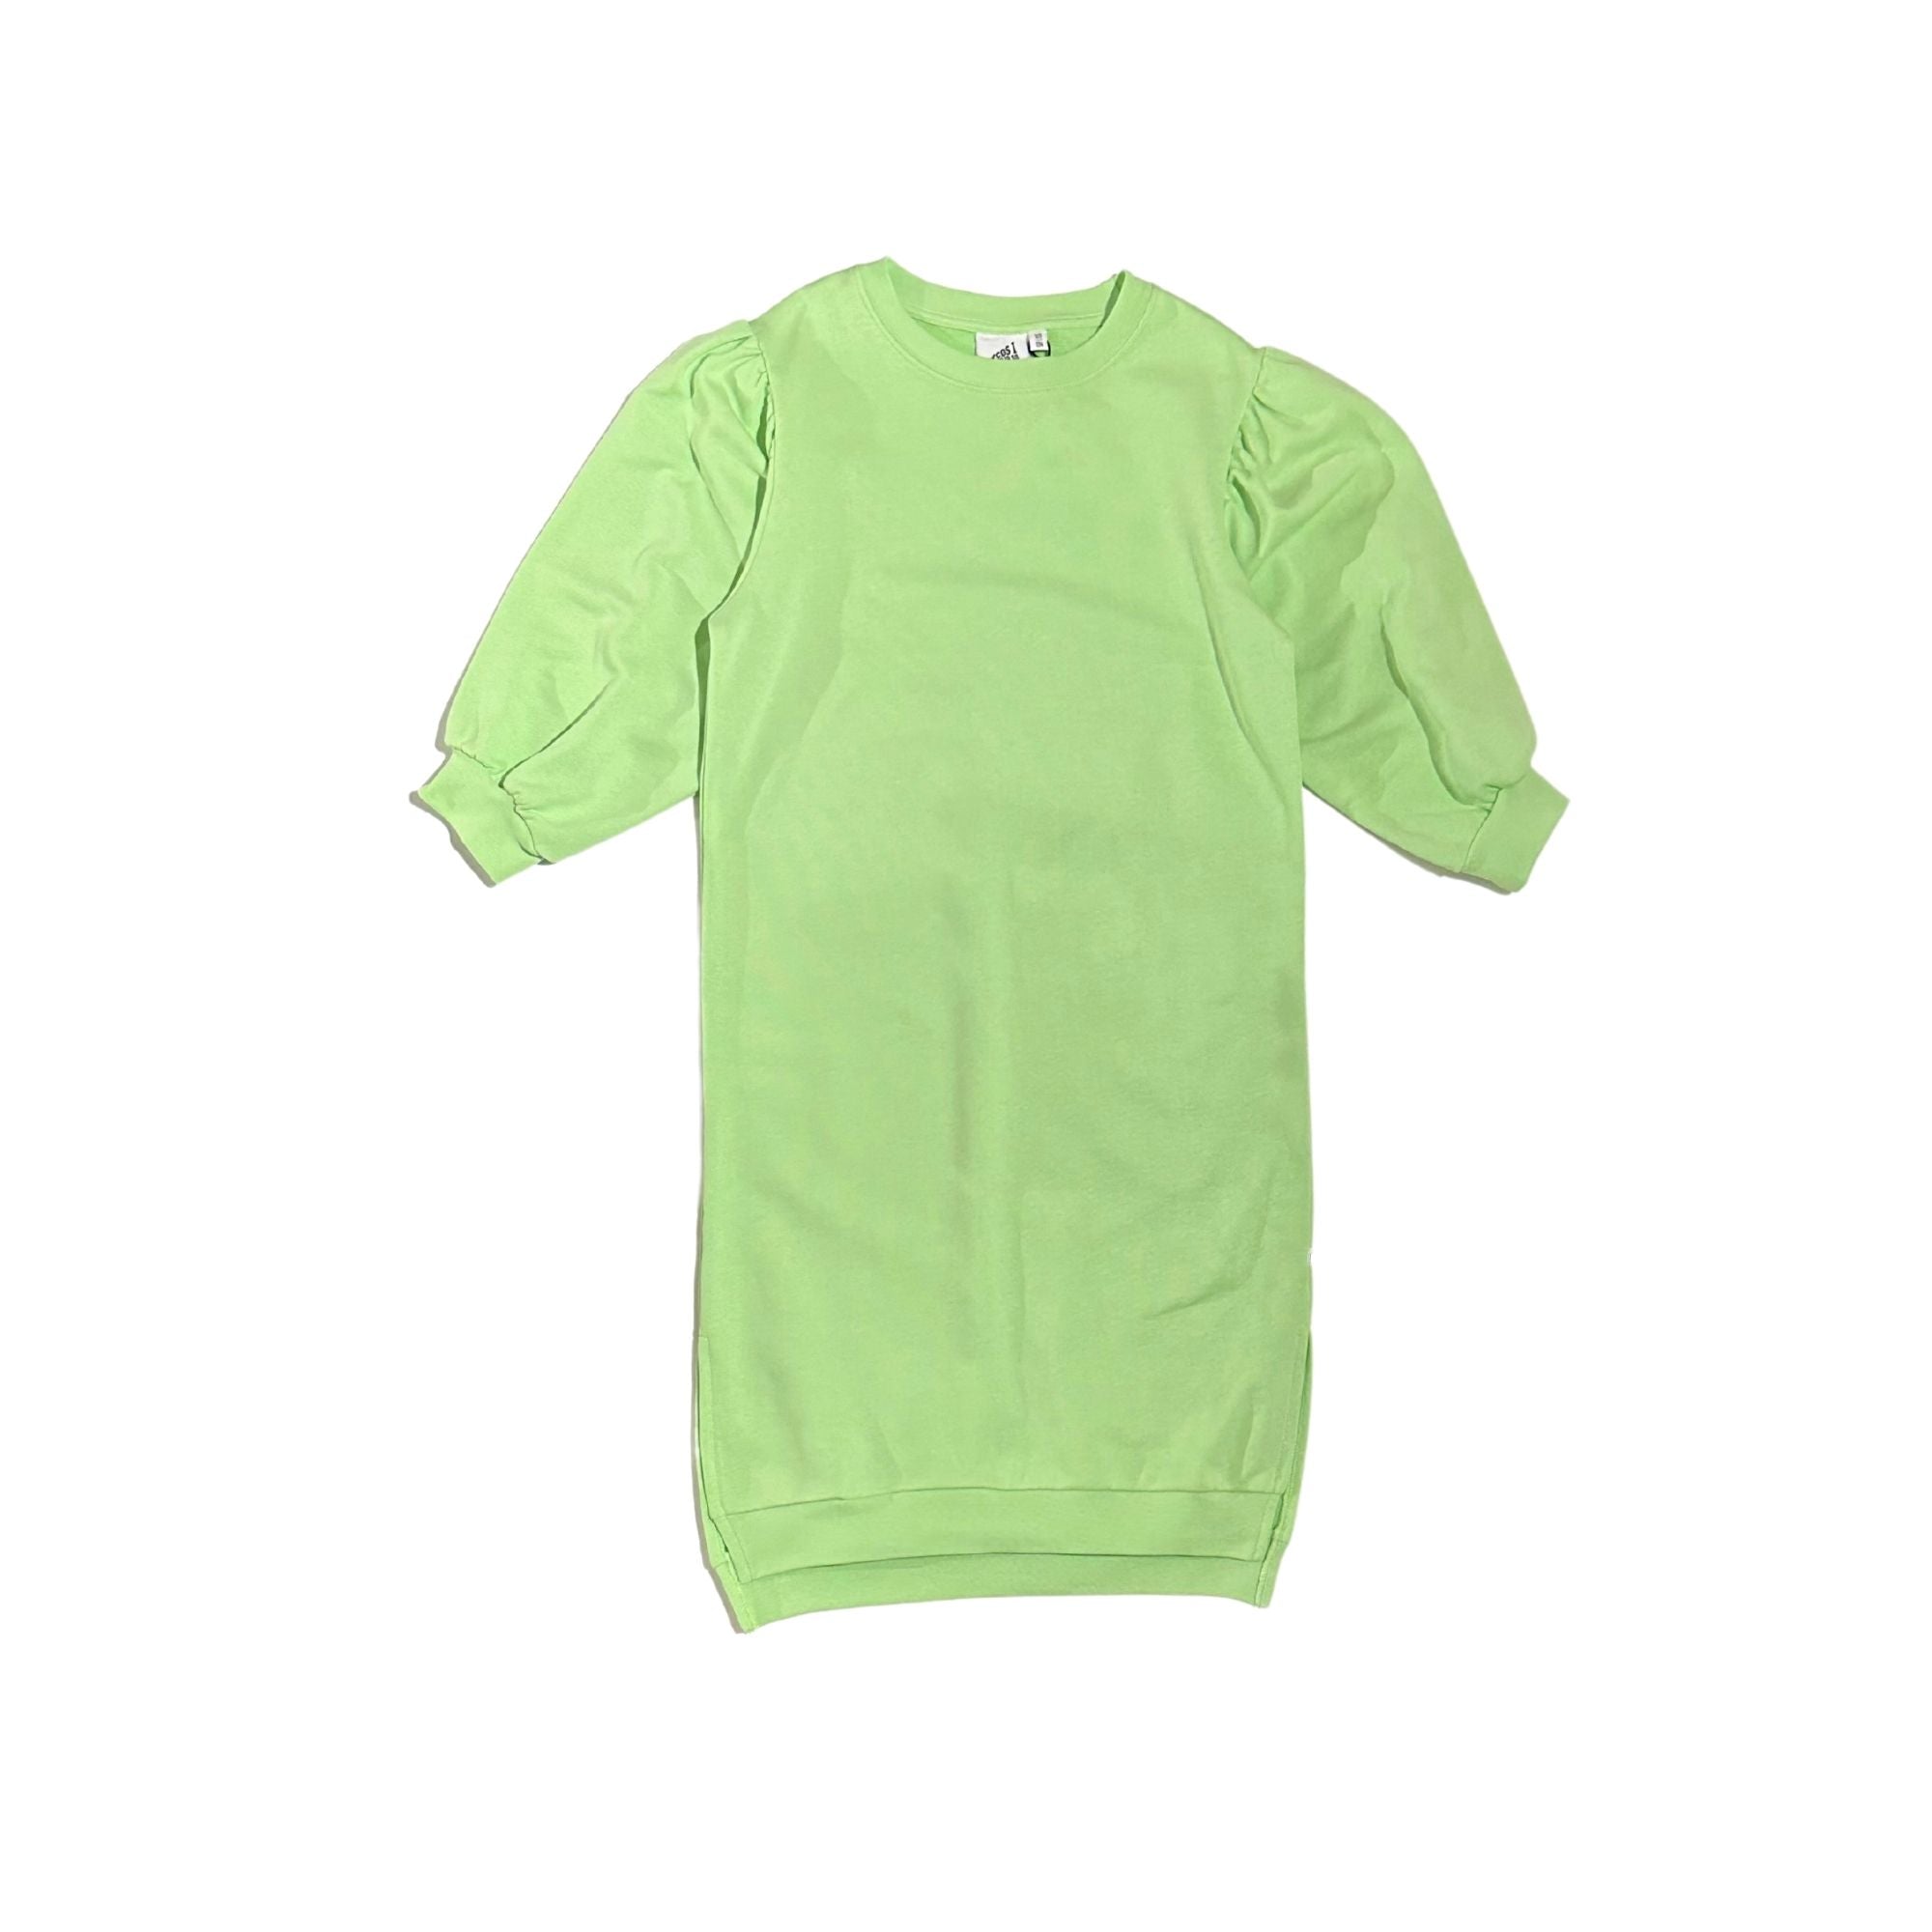 Cos I Said So - puff sleeve sweater dress - paradise green